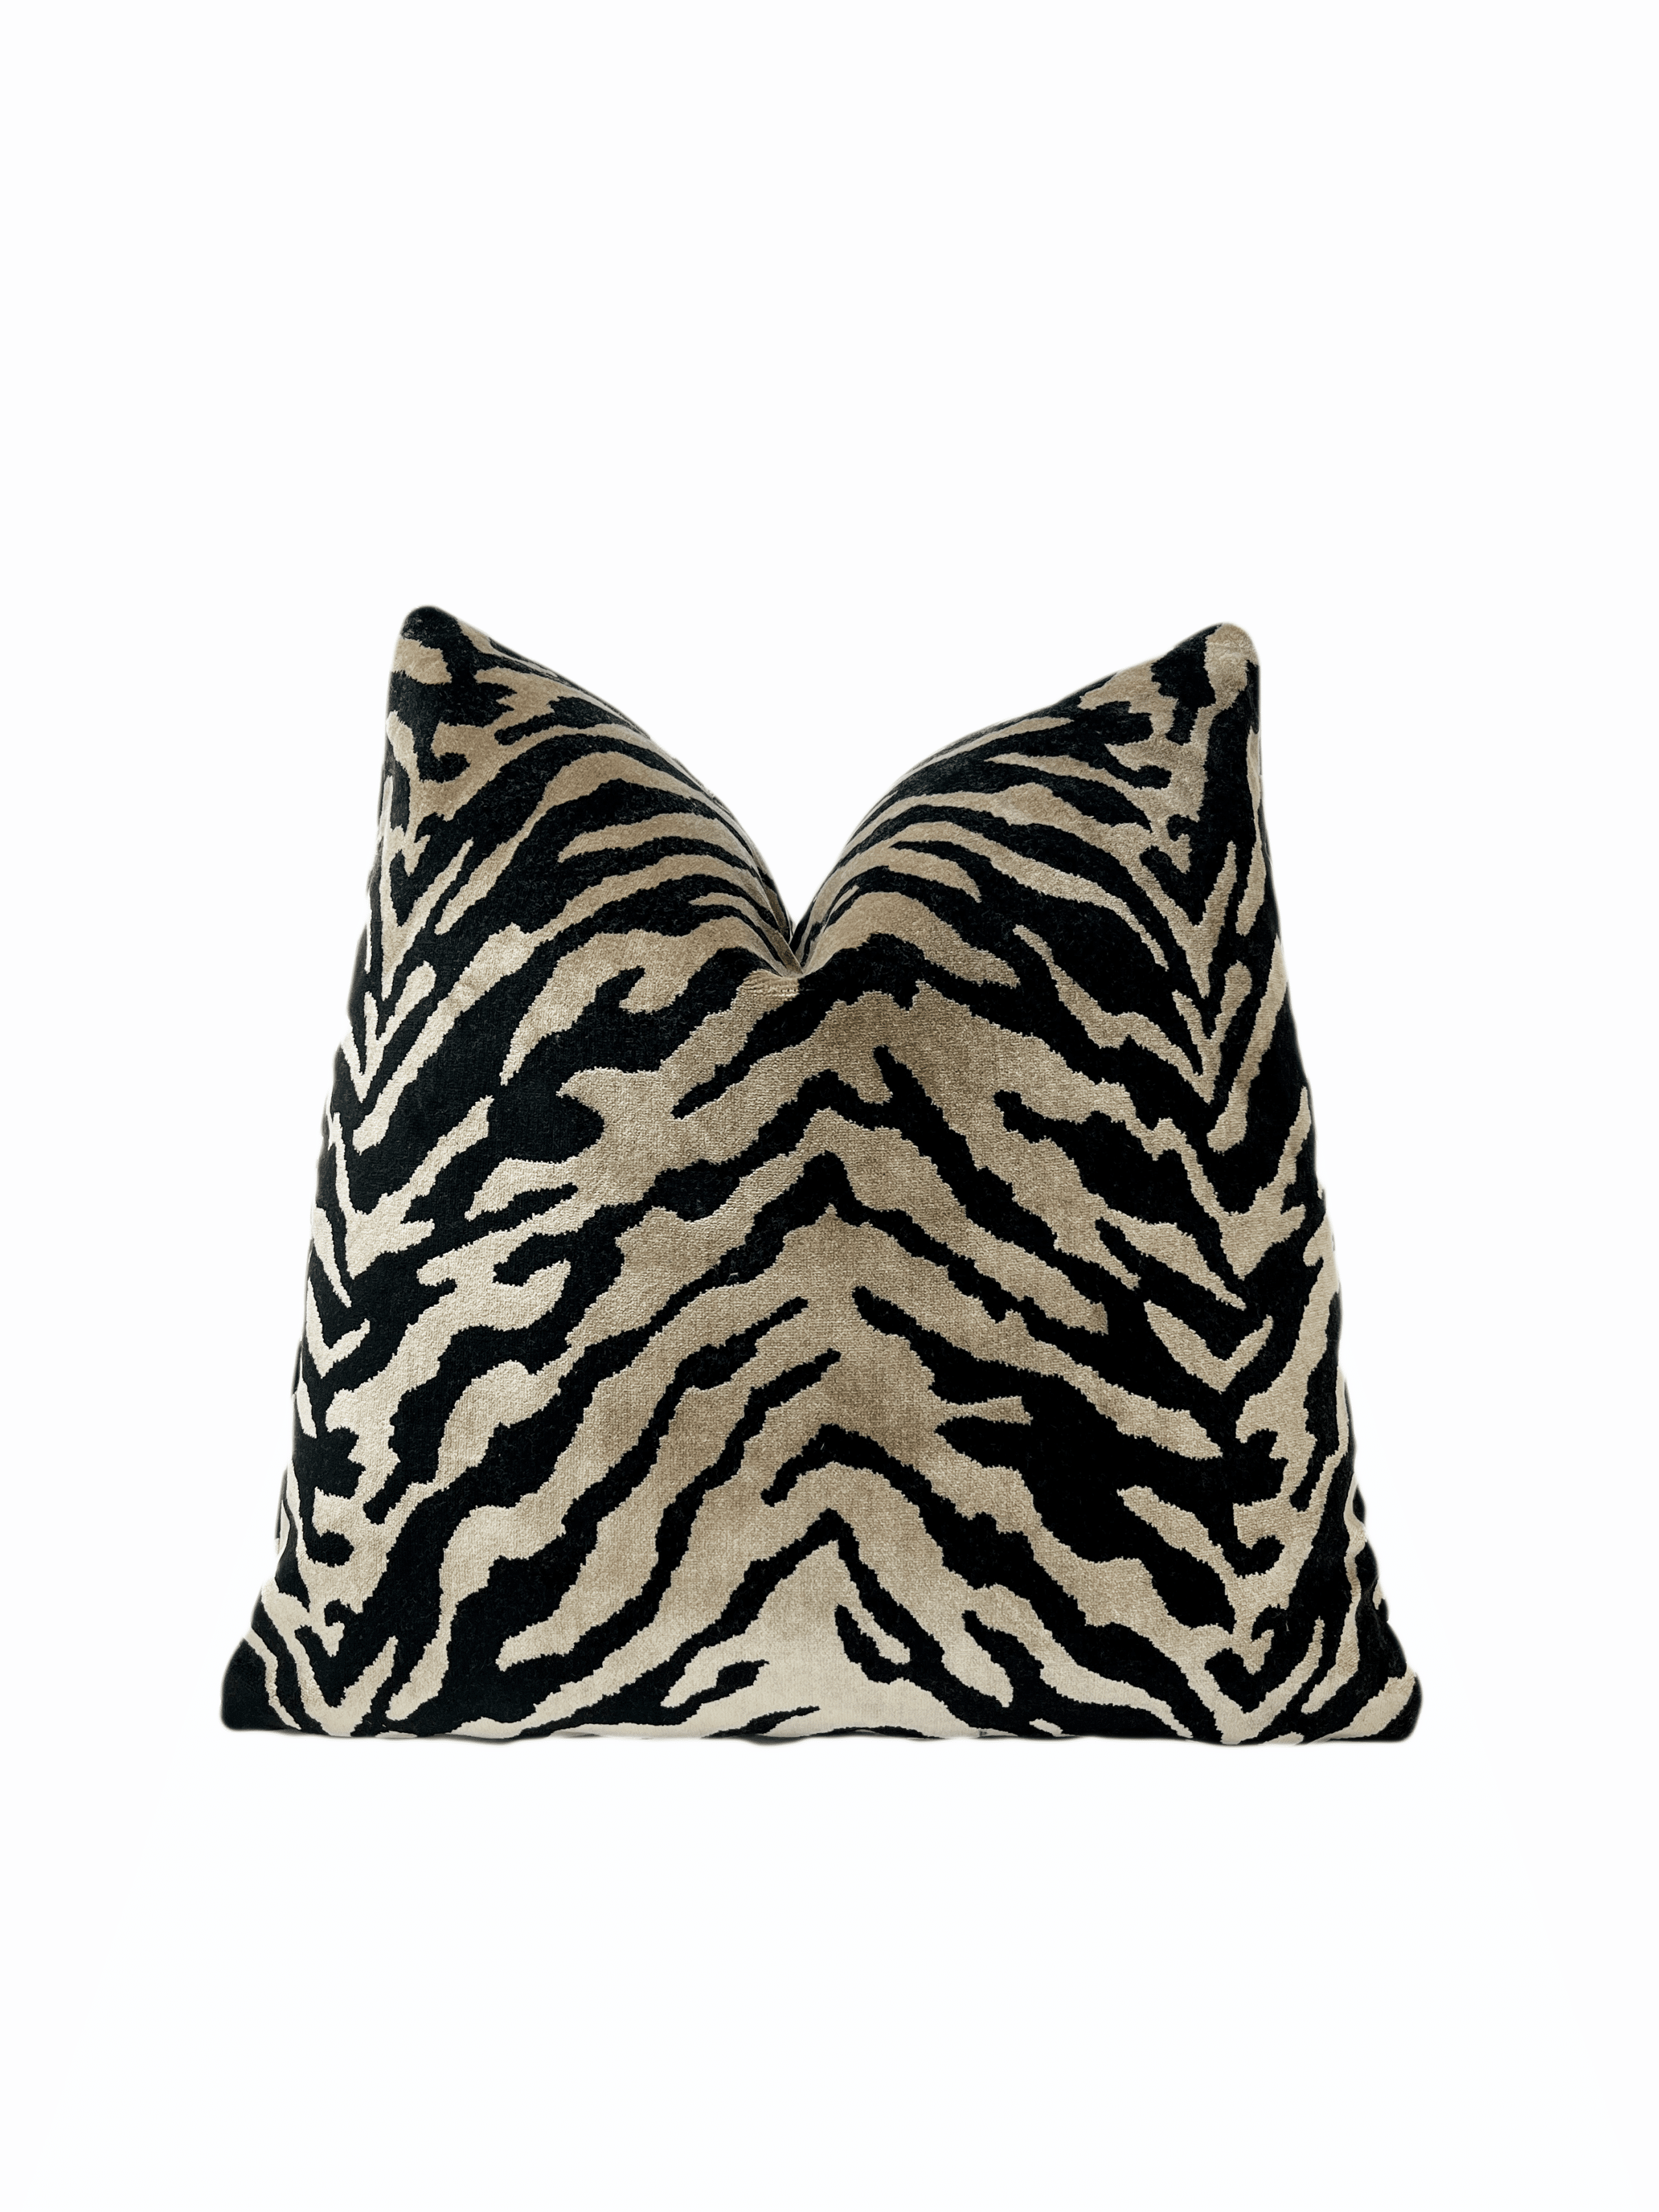 Black Beige Zebra Velvet Animal Print Throw Pillow Cover | Home Couture